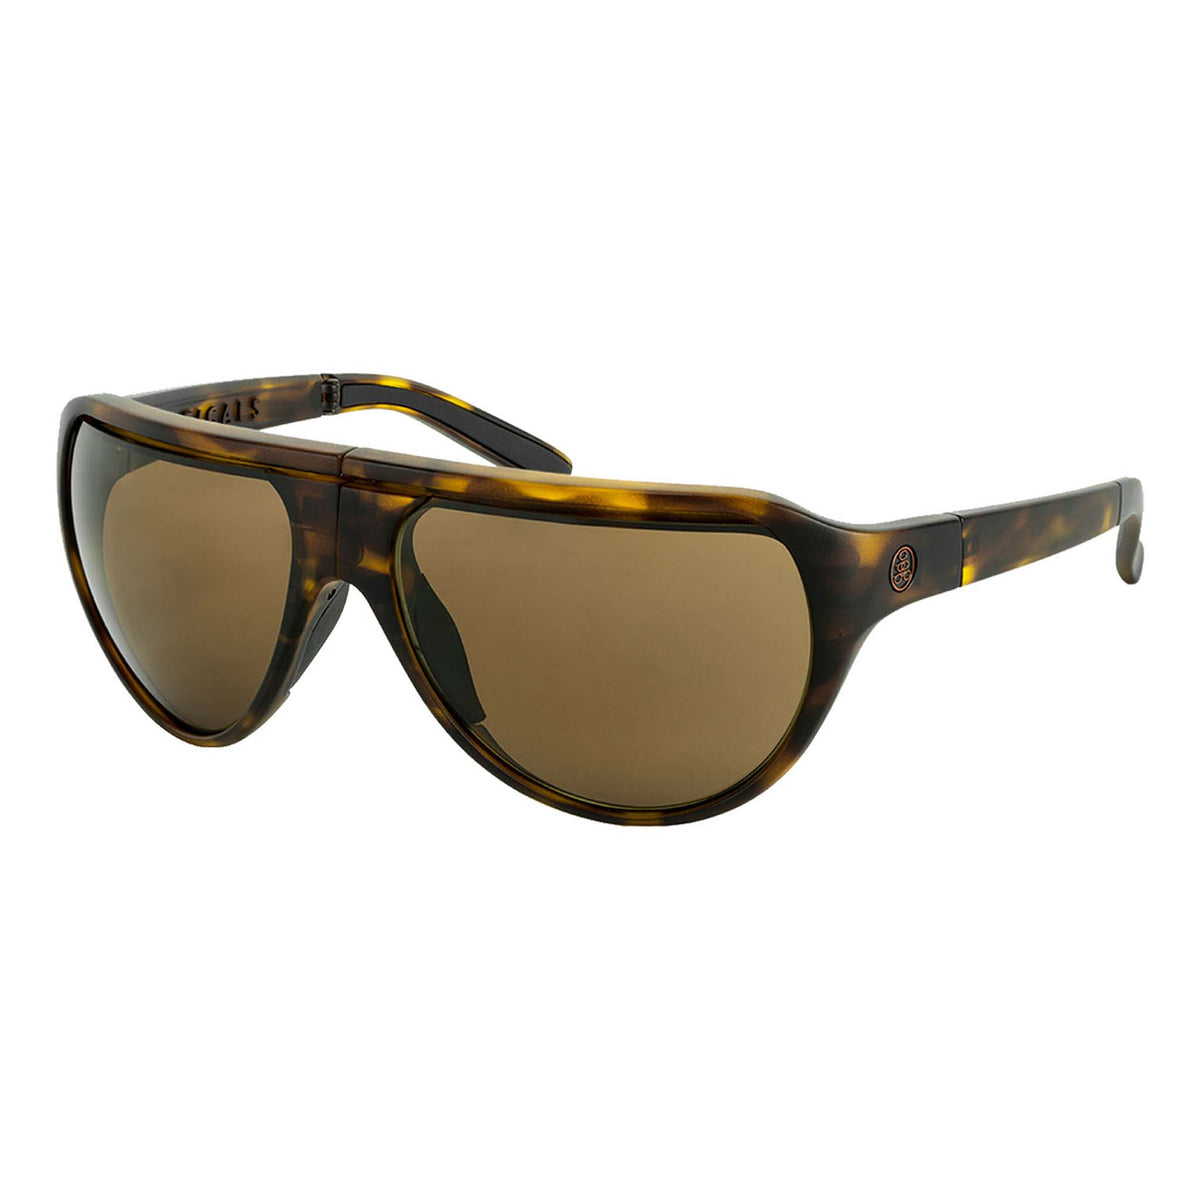 Popticals, Premium Compact Sunglasses, PopAir, 300010-CTNP, Polarized Sunglasses, Gloss Tortoise Frame, Brown Lenses, Glam View